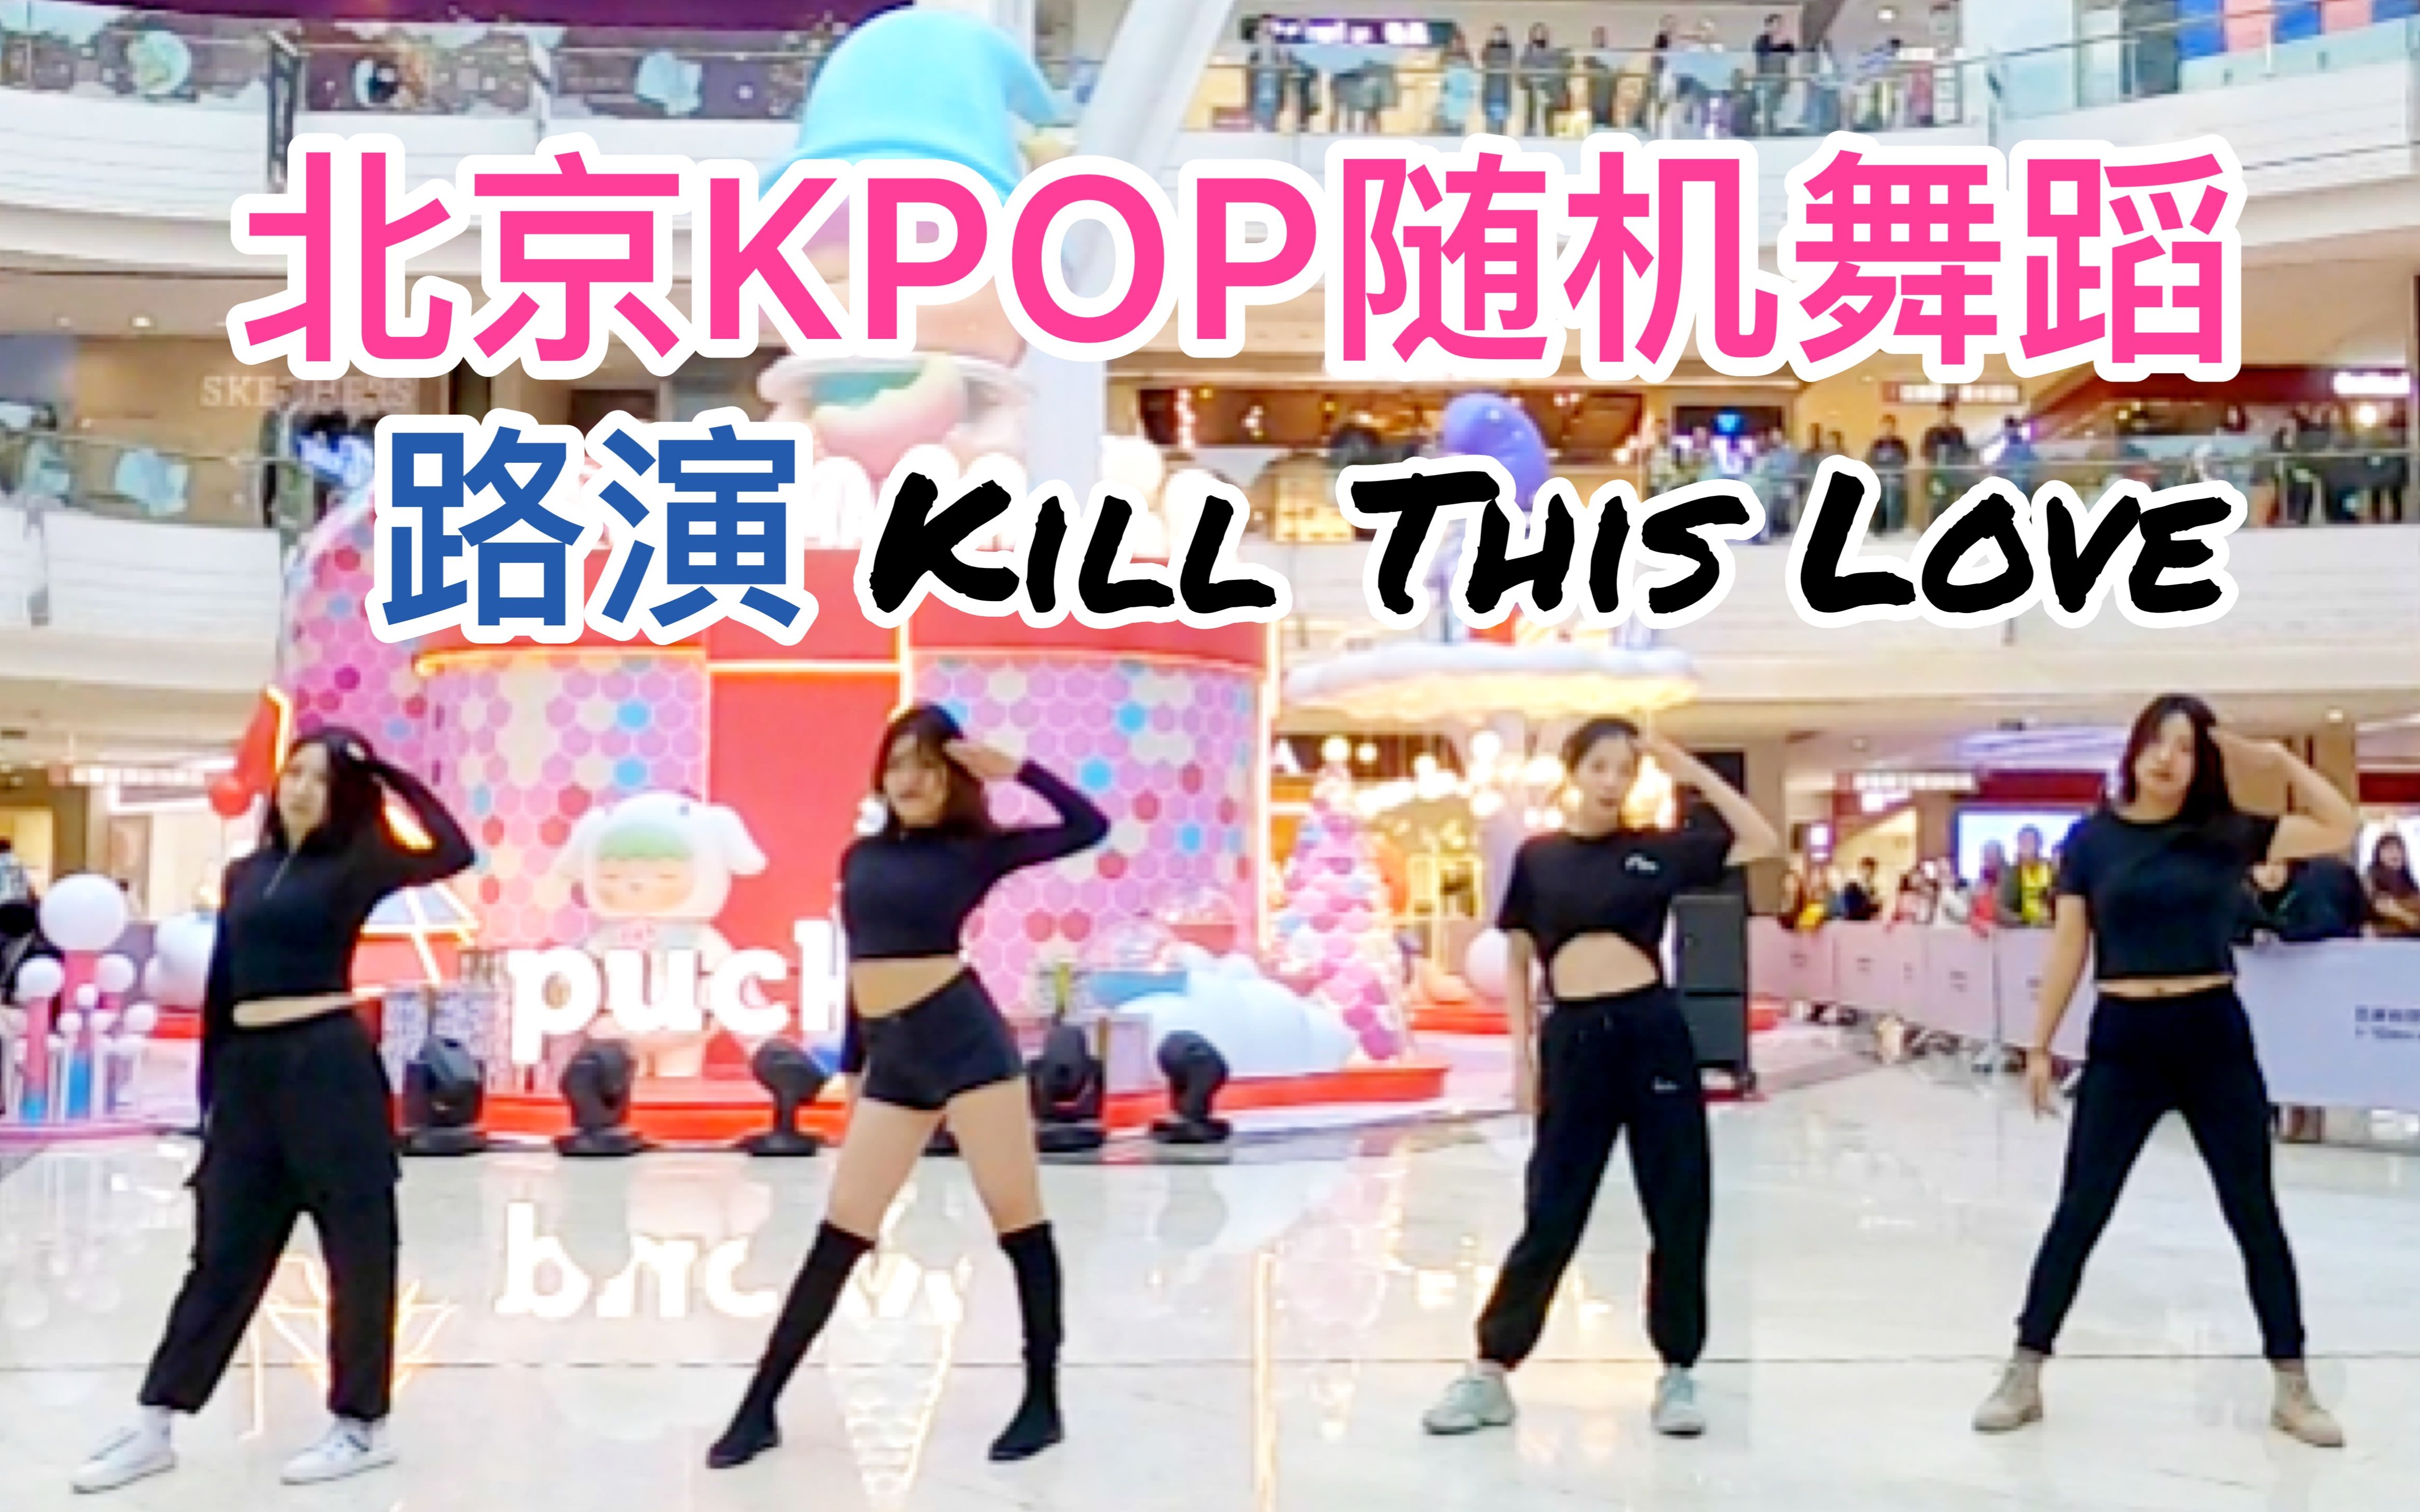 【TheMaze】北京KPOP随机舞蹈2019.12.14 - 路演《BLACKPINK - KILL THIS LOVE》～ 随放随跳